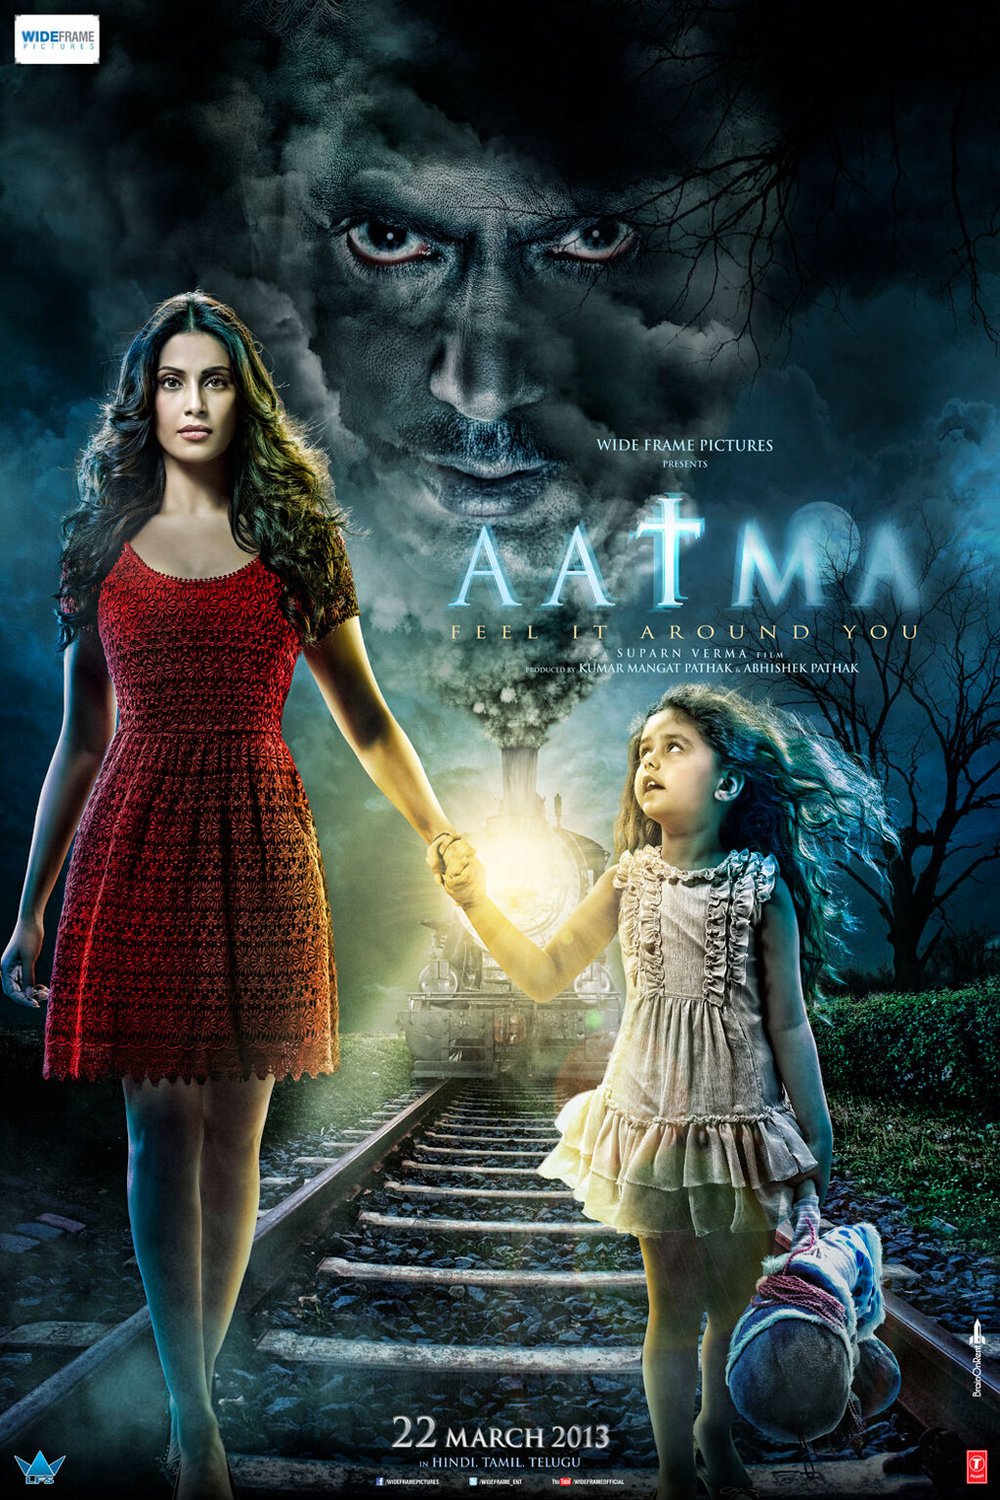 L'affiche originale du film Aatma en Hindi